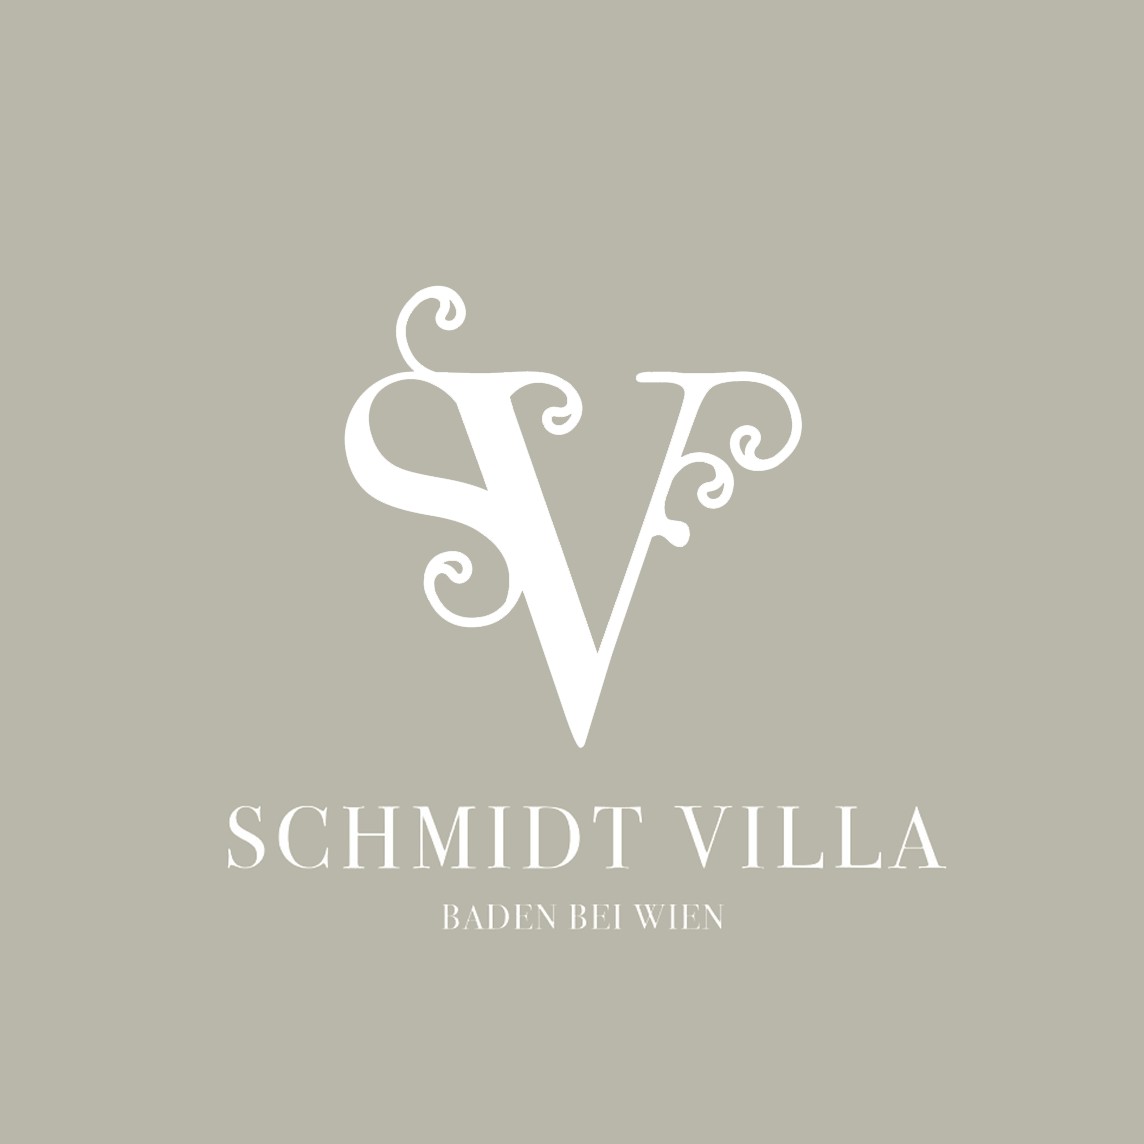 Schmidt Villa Logodesign